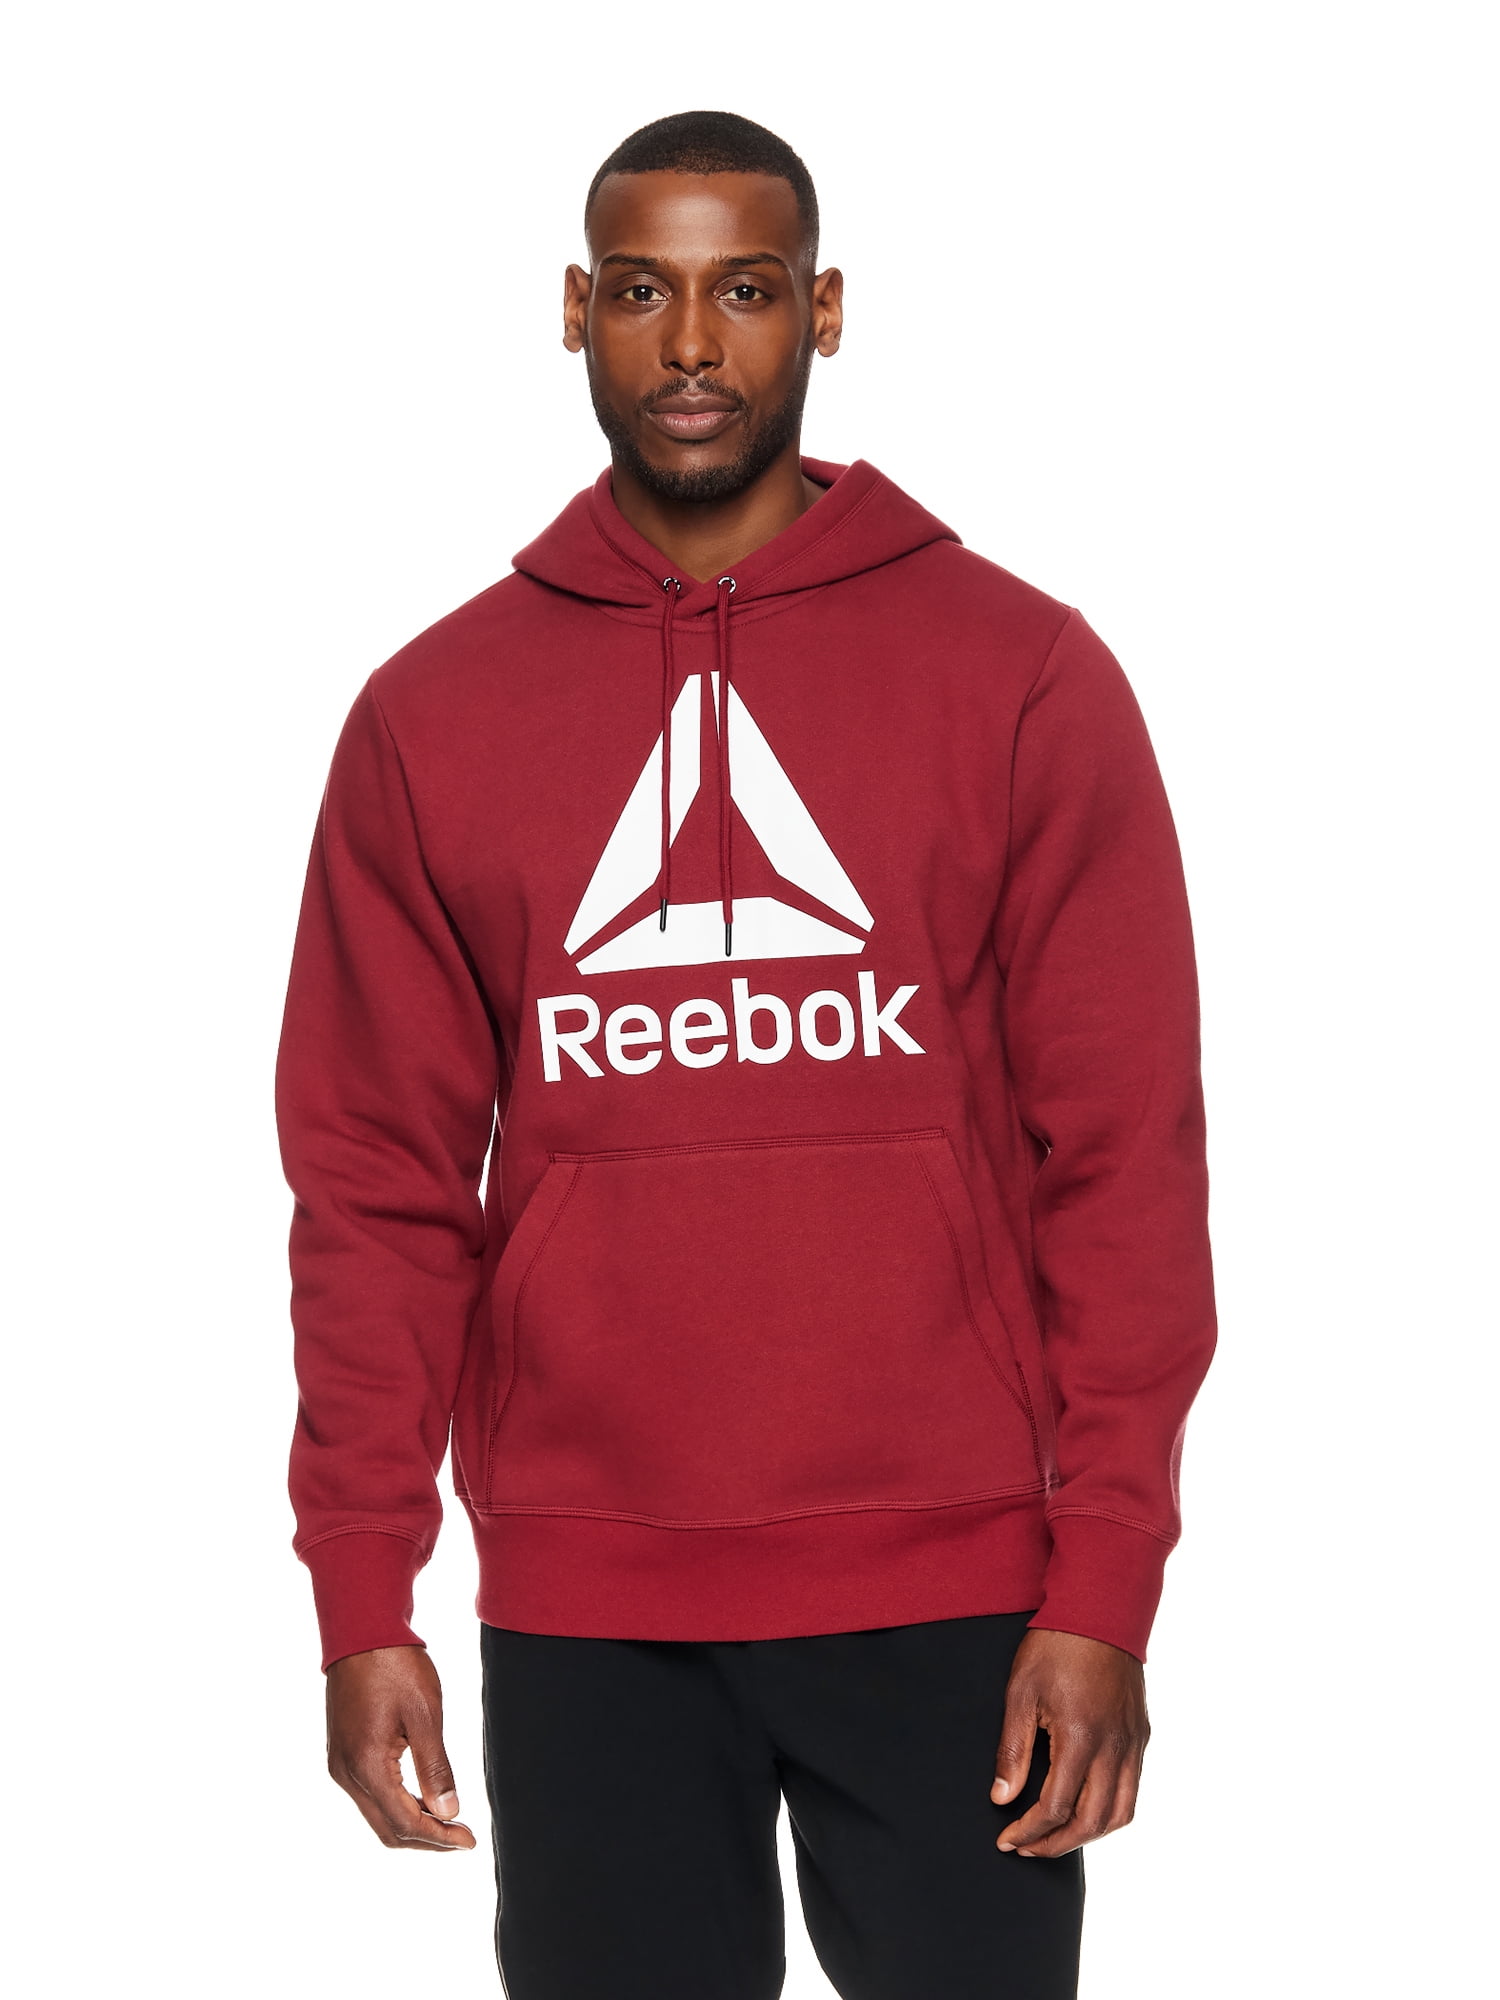 Reebok Men's Delta Logo Hoodie, Sizes S-3XL 